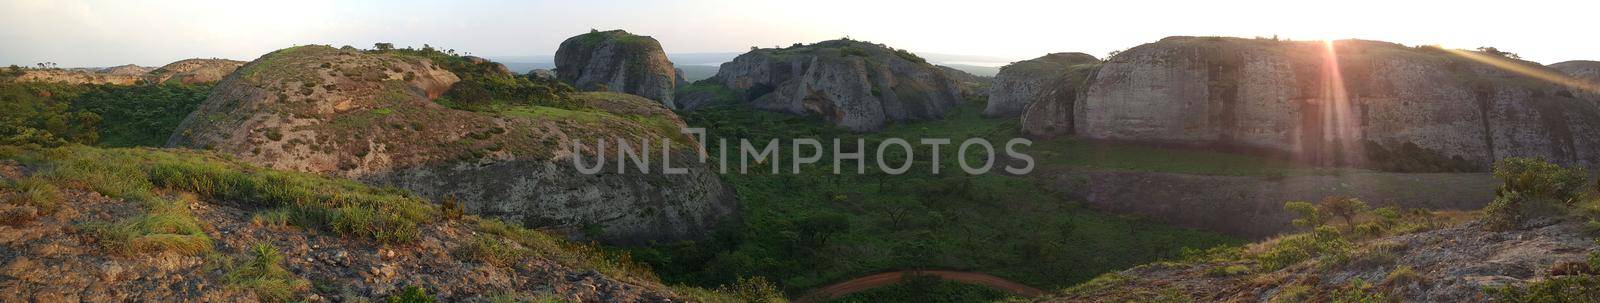 The Black Rocks at Pungo Andongo panorama (Pedras Negras de Pungo Andongo) in Angola